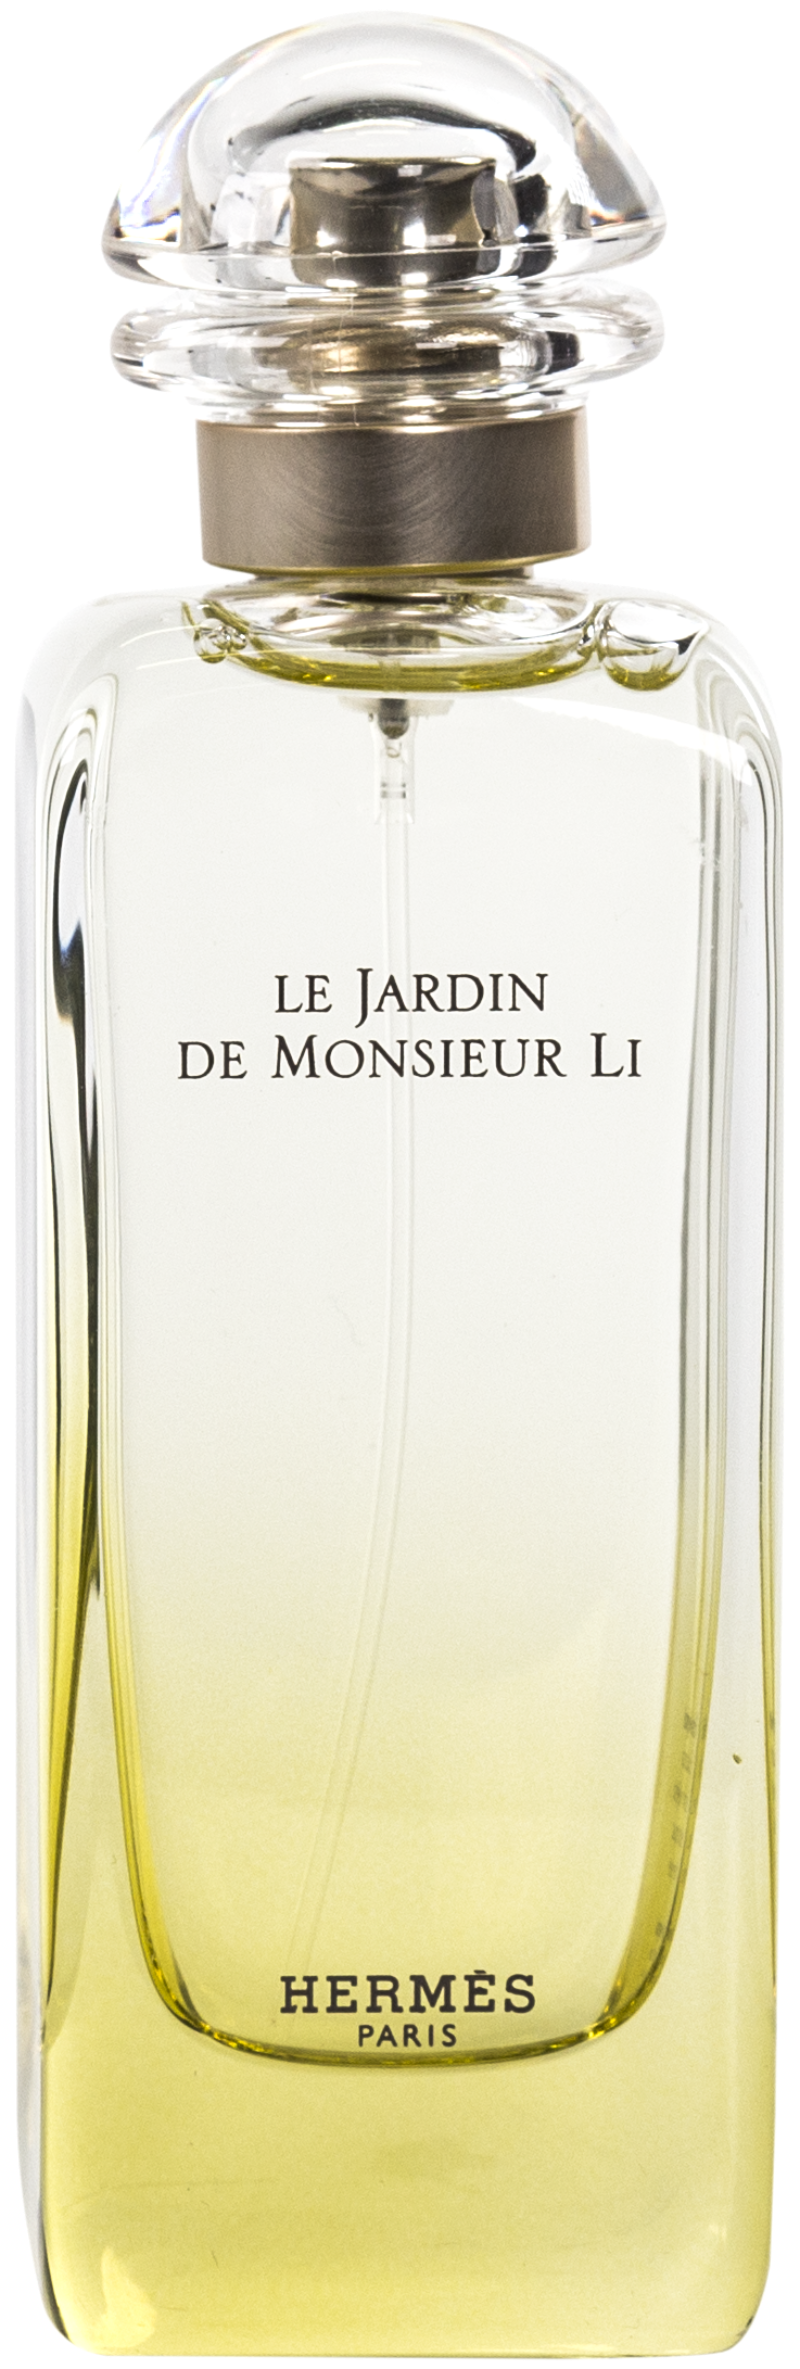 Offizieller Versandhandel Hermes - Le Jardin Monsieur Li De EdT ml 50